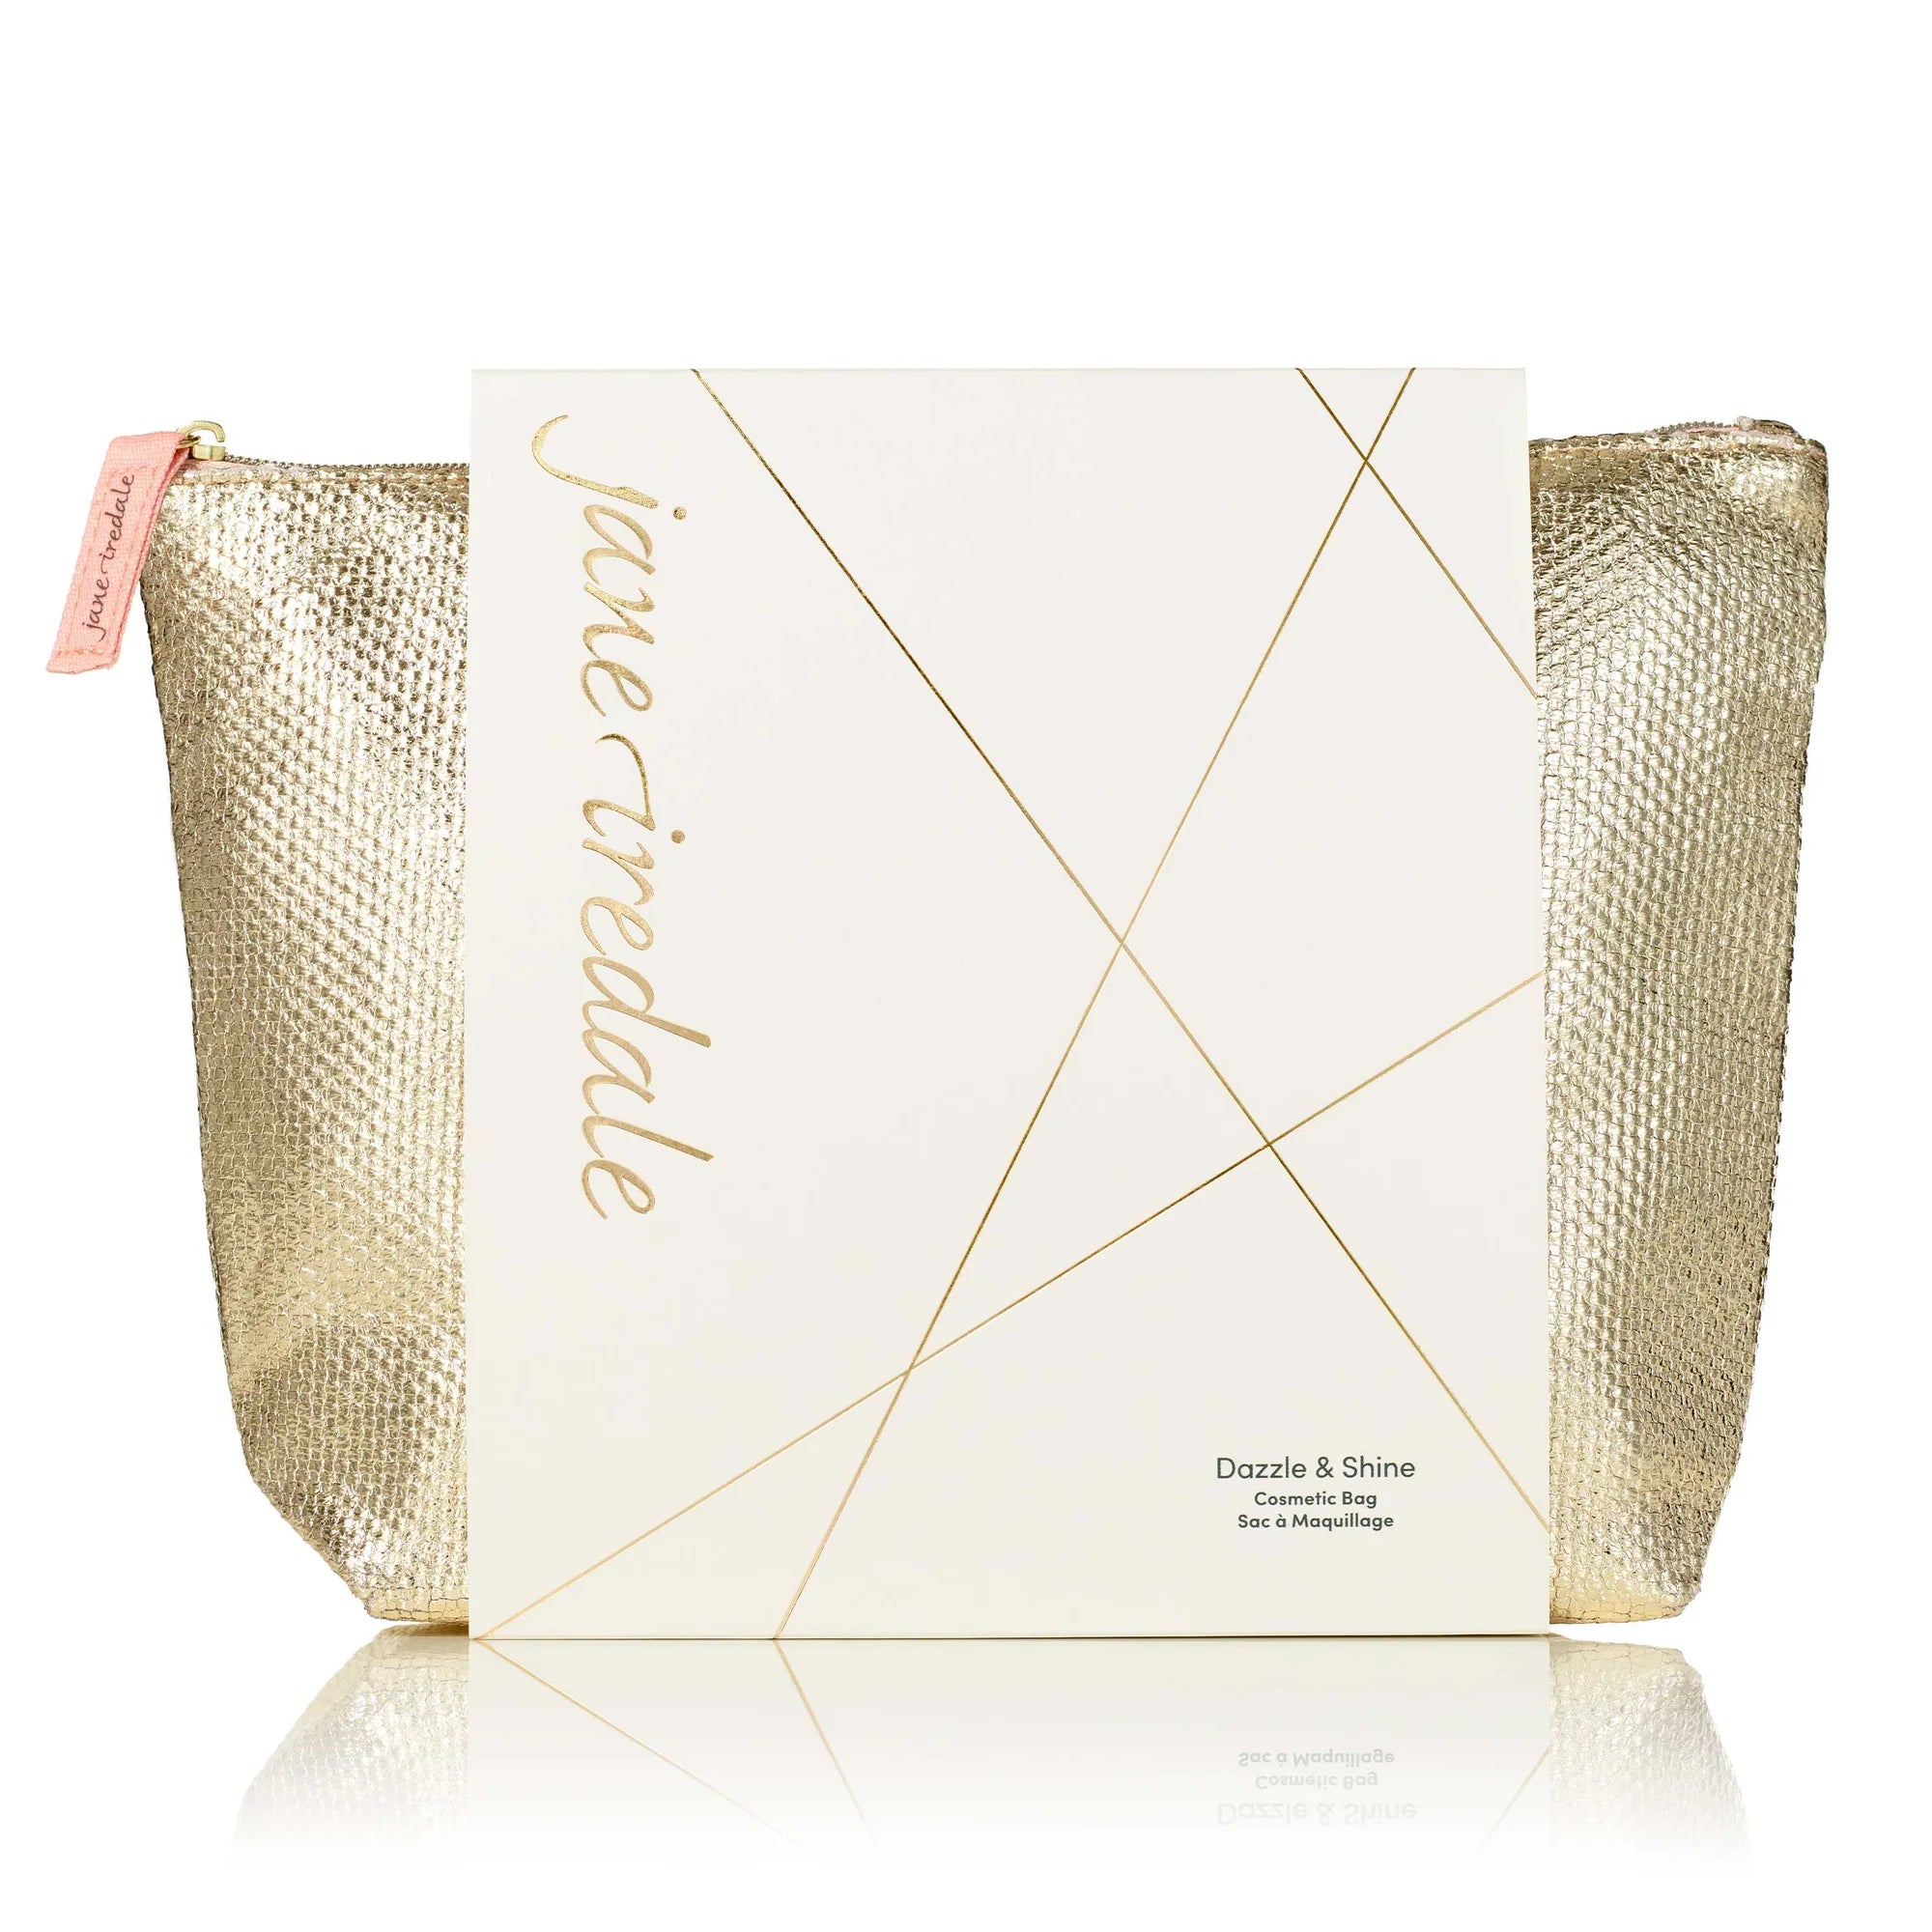 Jane Iredale Dazzle & Shine Cosmetic Bag